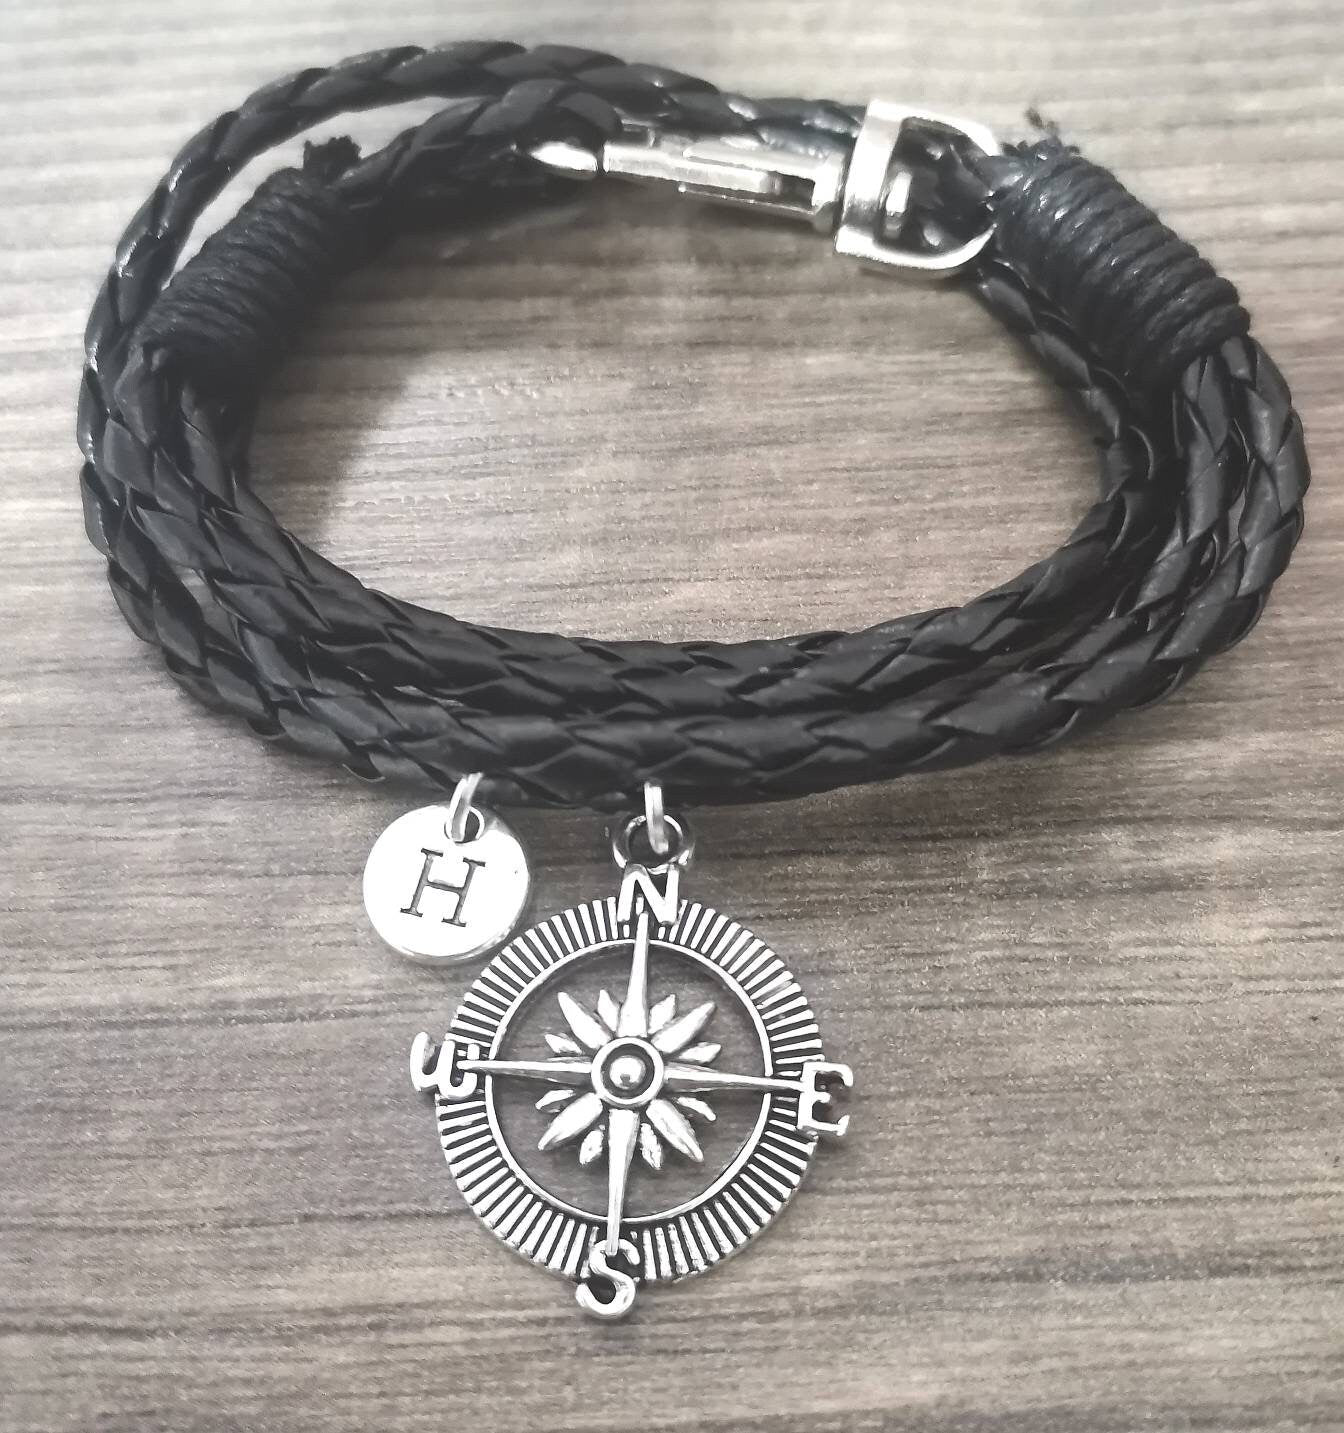 Compass bracelet, Mens Bracelet, Mens leather bracelet, Boyfriend gift, Compass Charm, Boyfriend Bracelet, Boyfriend Gift, Compass Gift